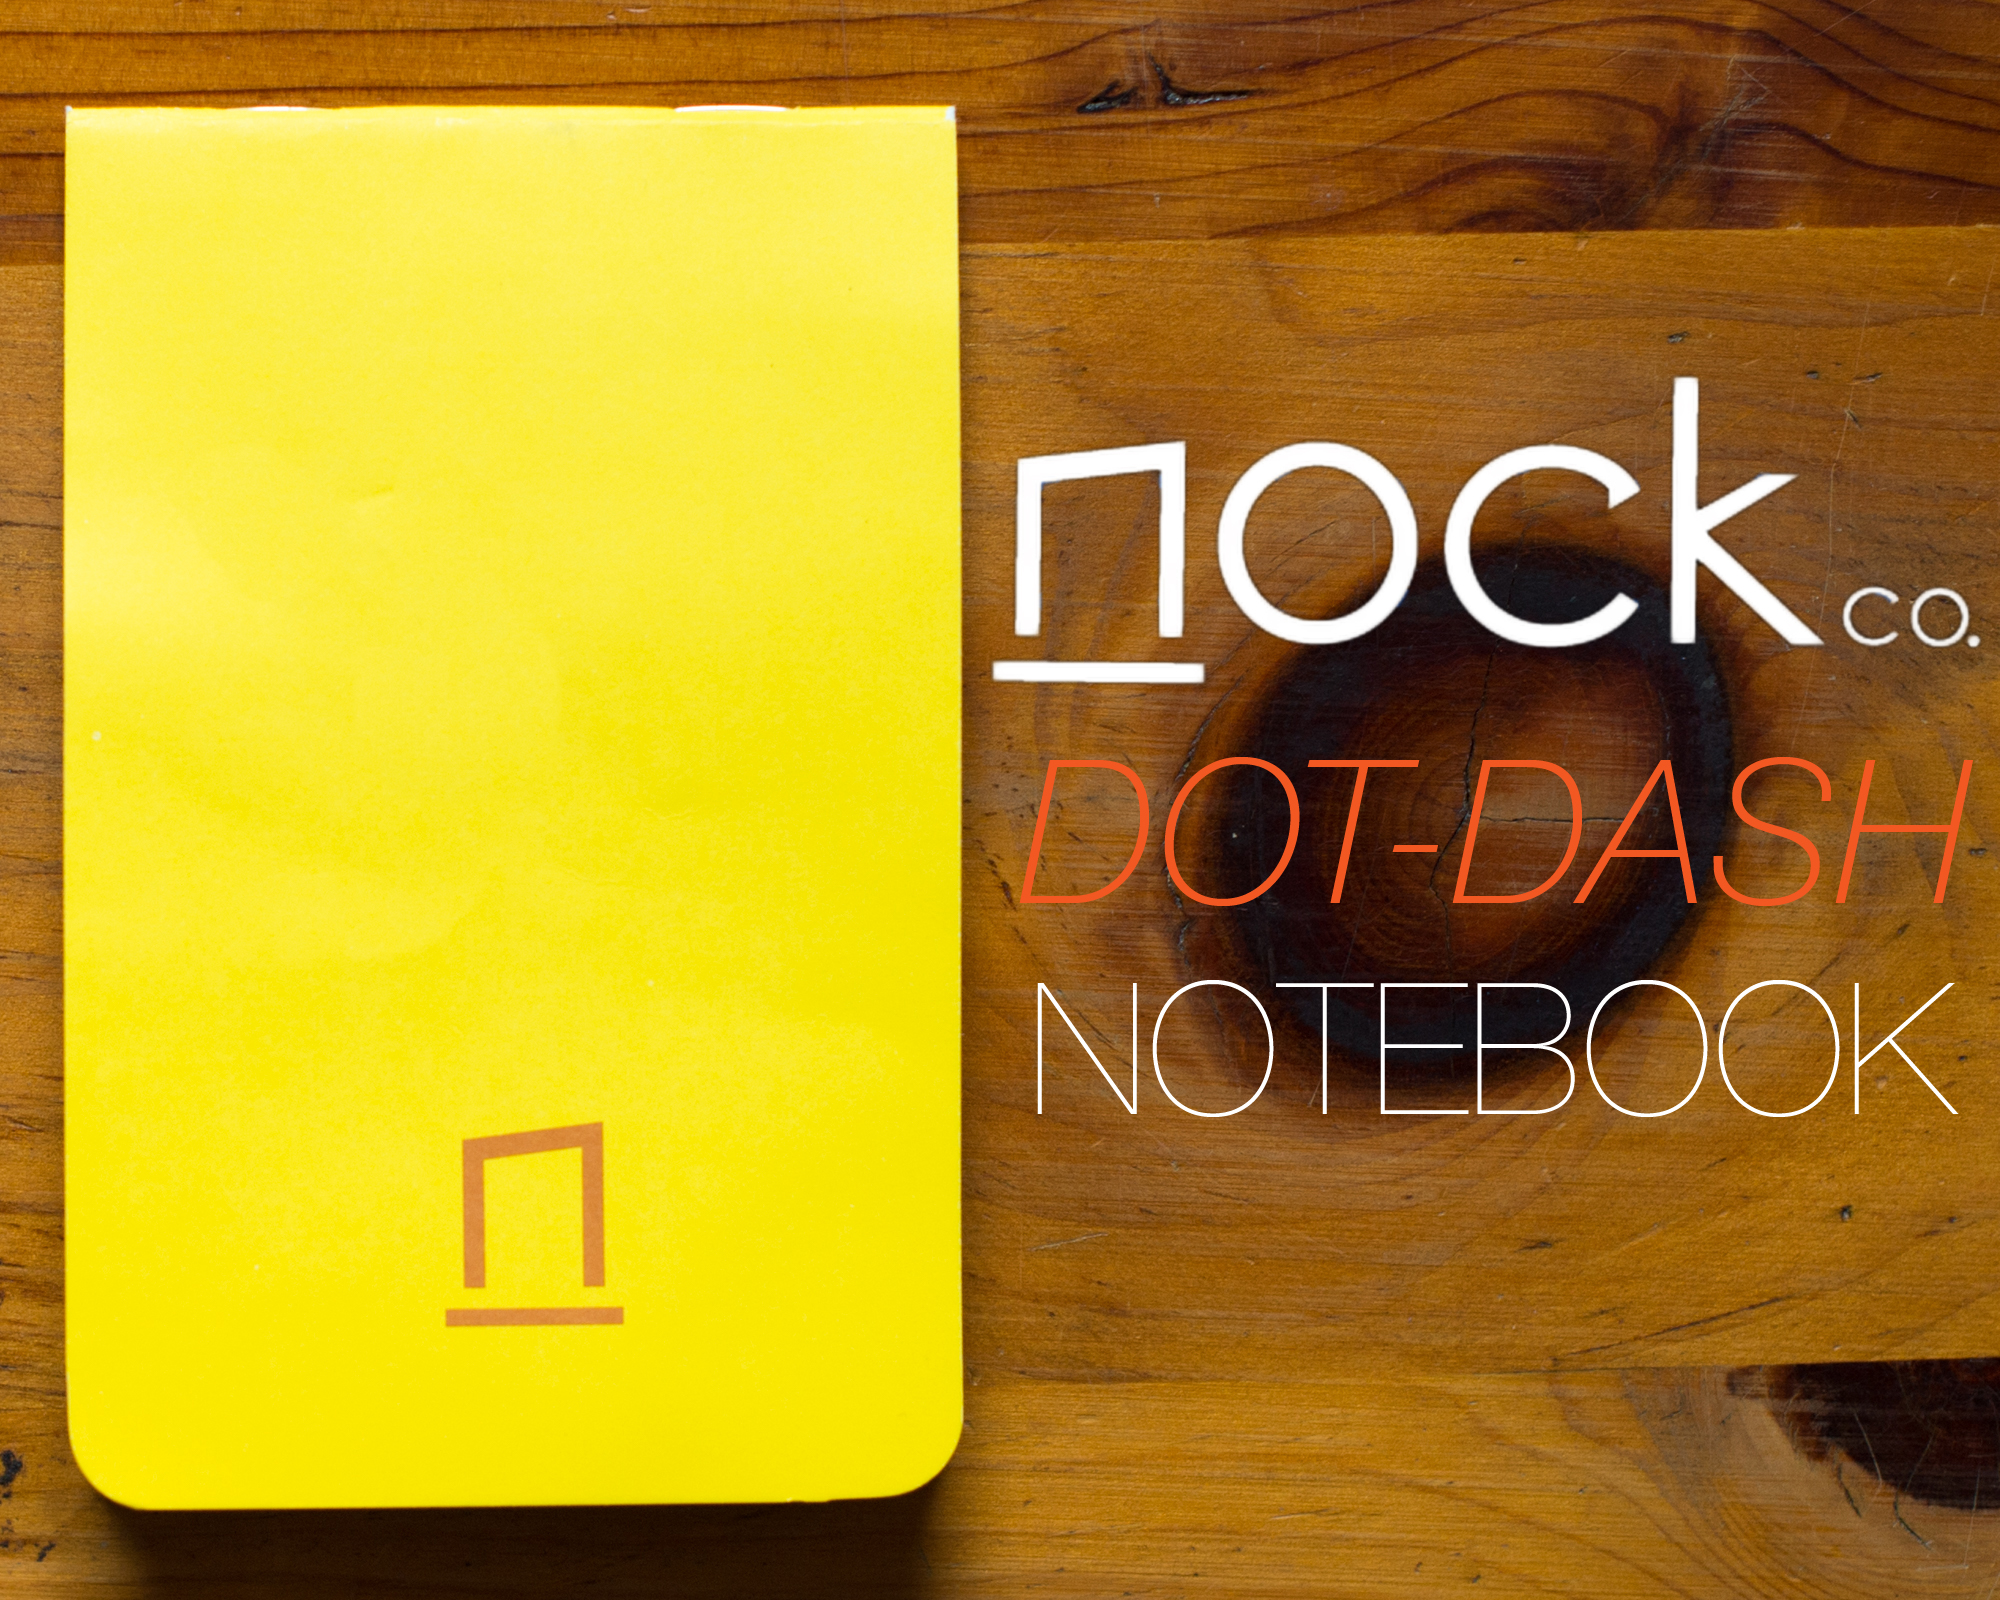 Nock Co. Dot Dash Pocket Notebook Review